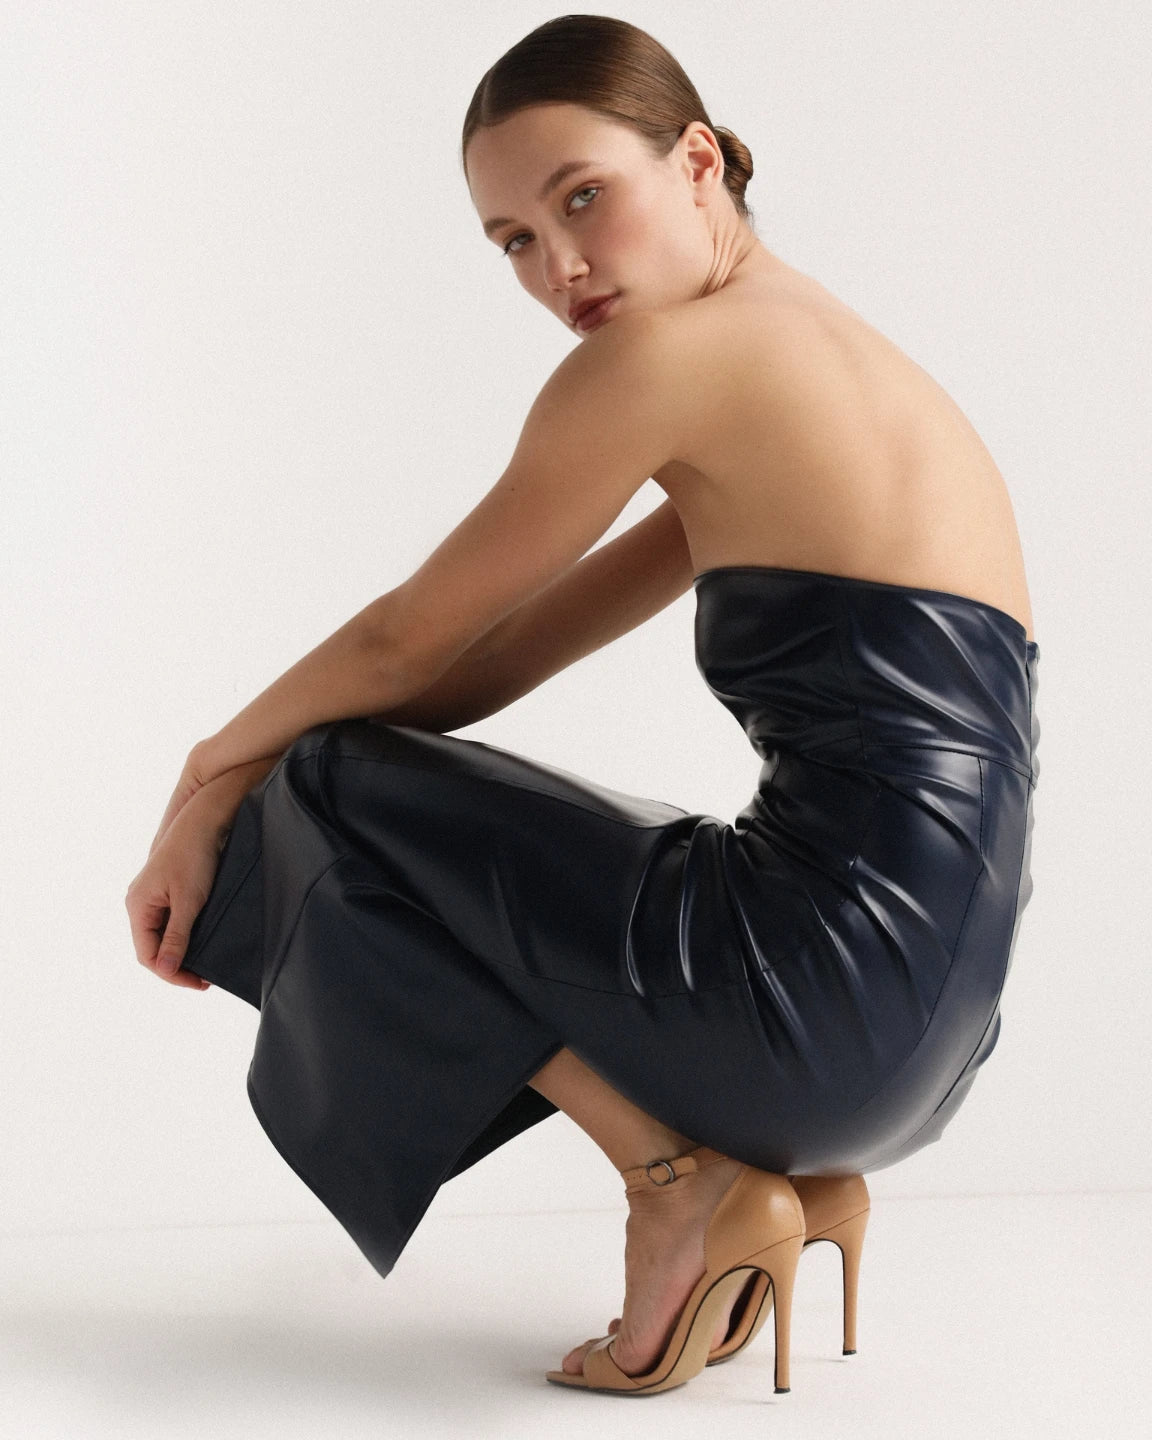 Eco-Leather Dress Kim